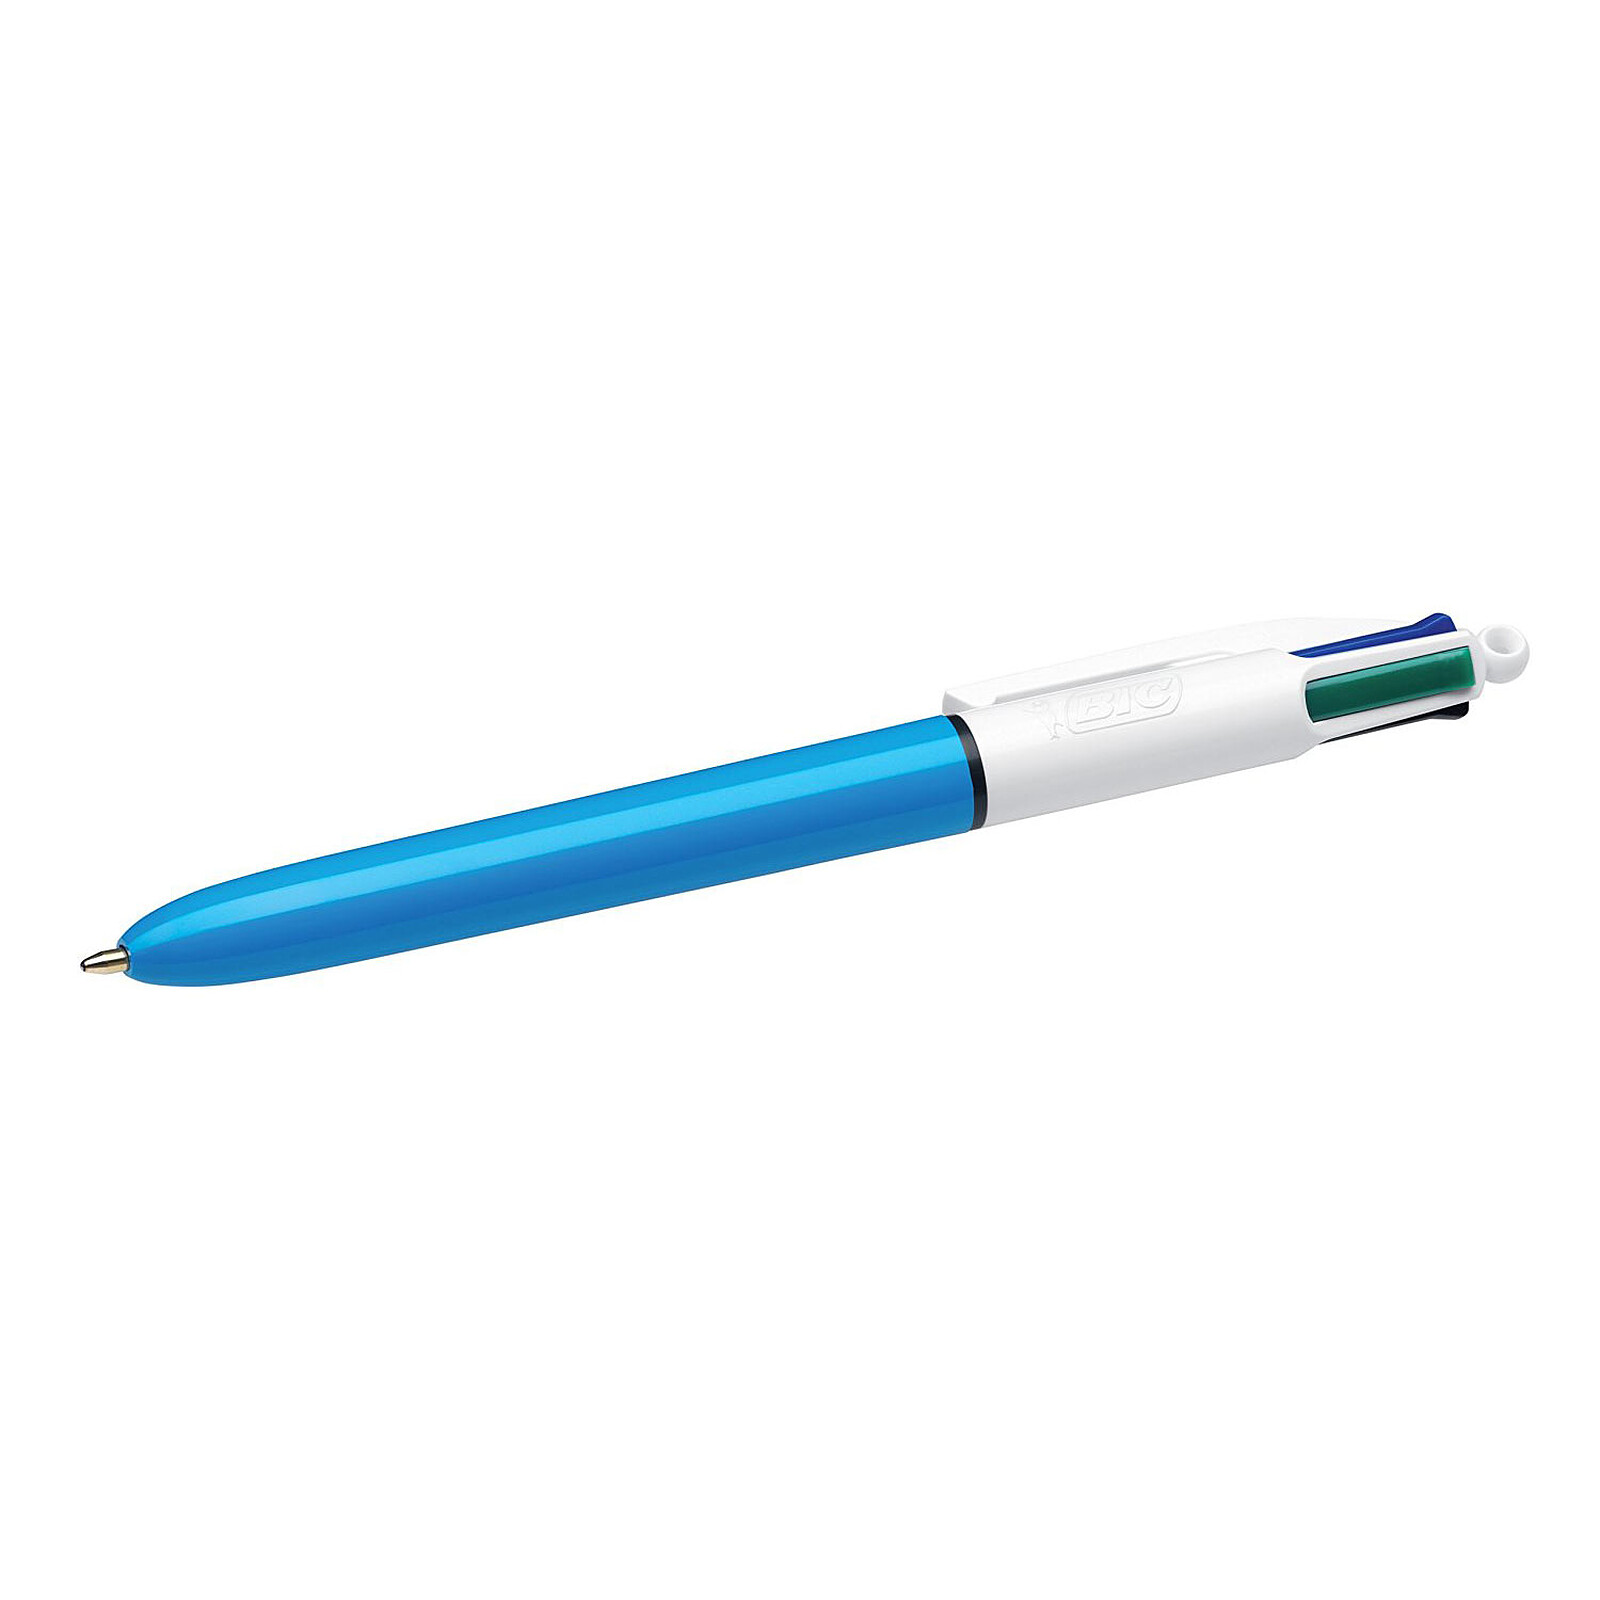 Recharge pour stylo bille 4 couleurs Bic pointe moyenne 1 mm sur